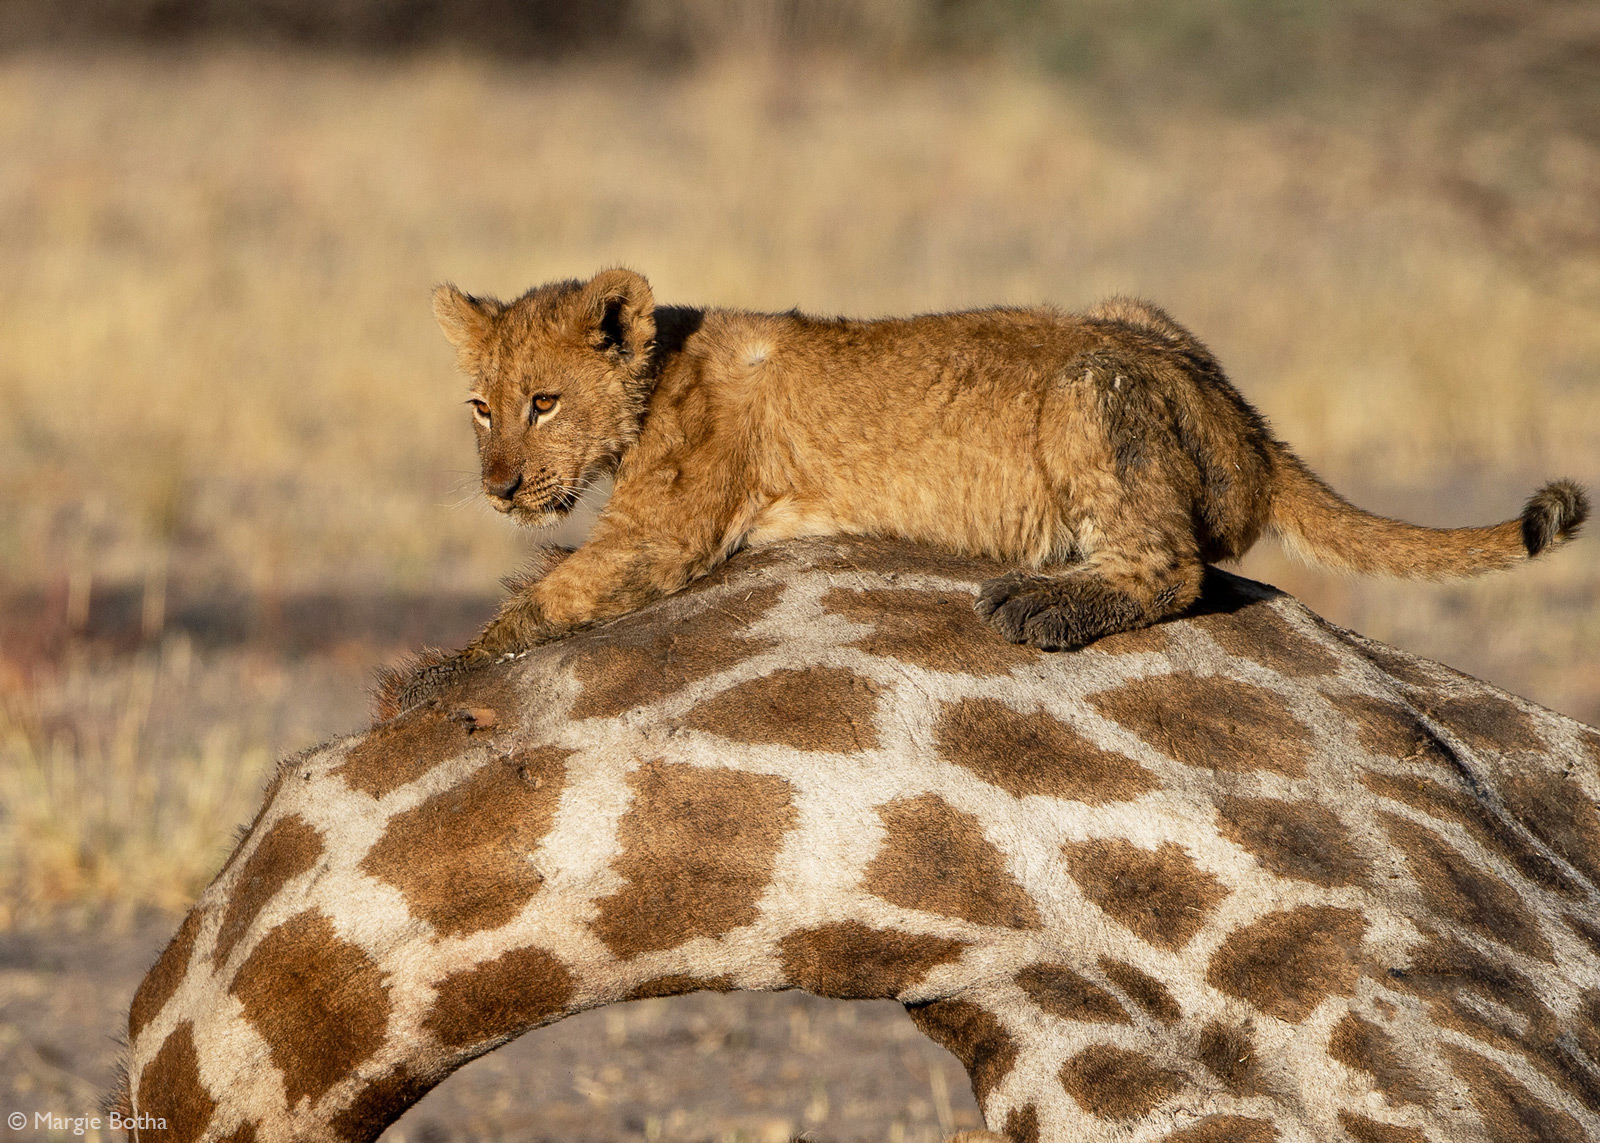 Margie-Botha-Lion-cub-on-giraffe-neck-Savuti-Botswana.jpg